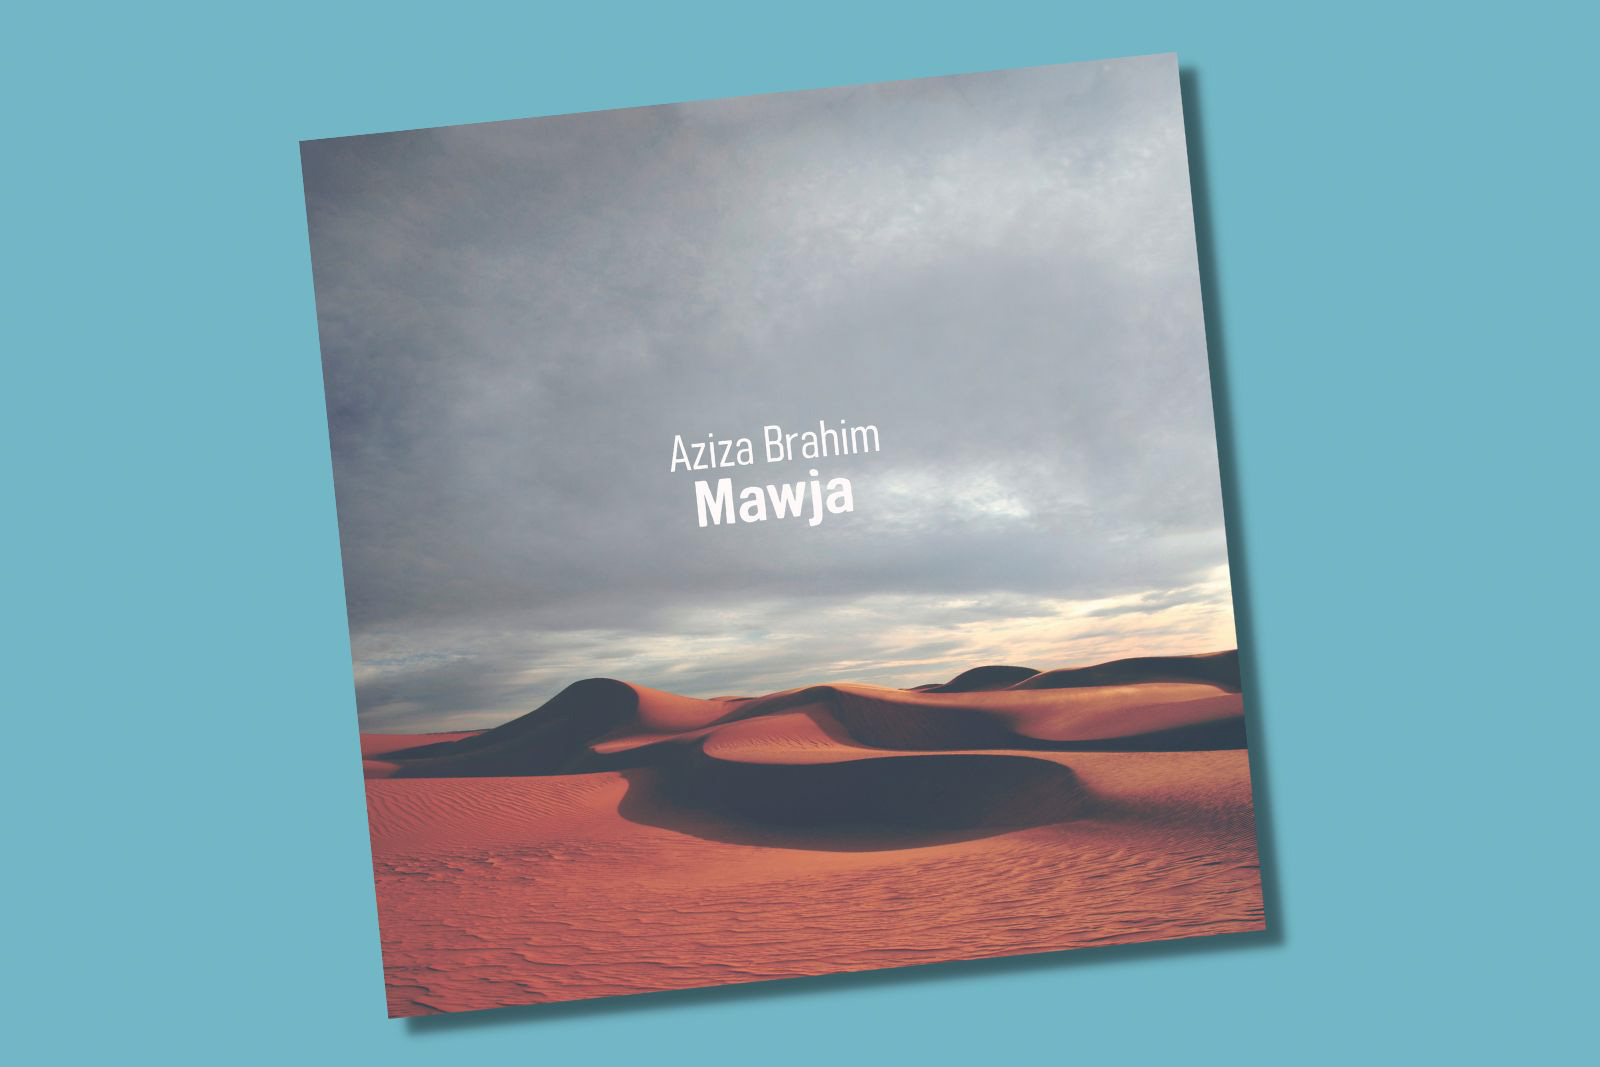 Brahim's latest album Mawja